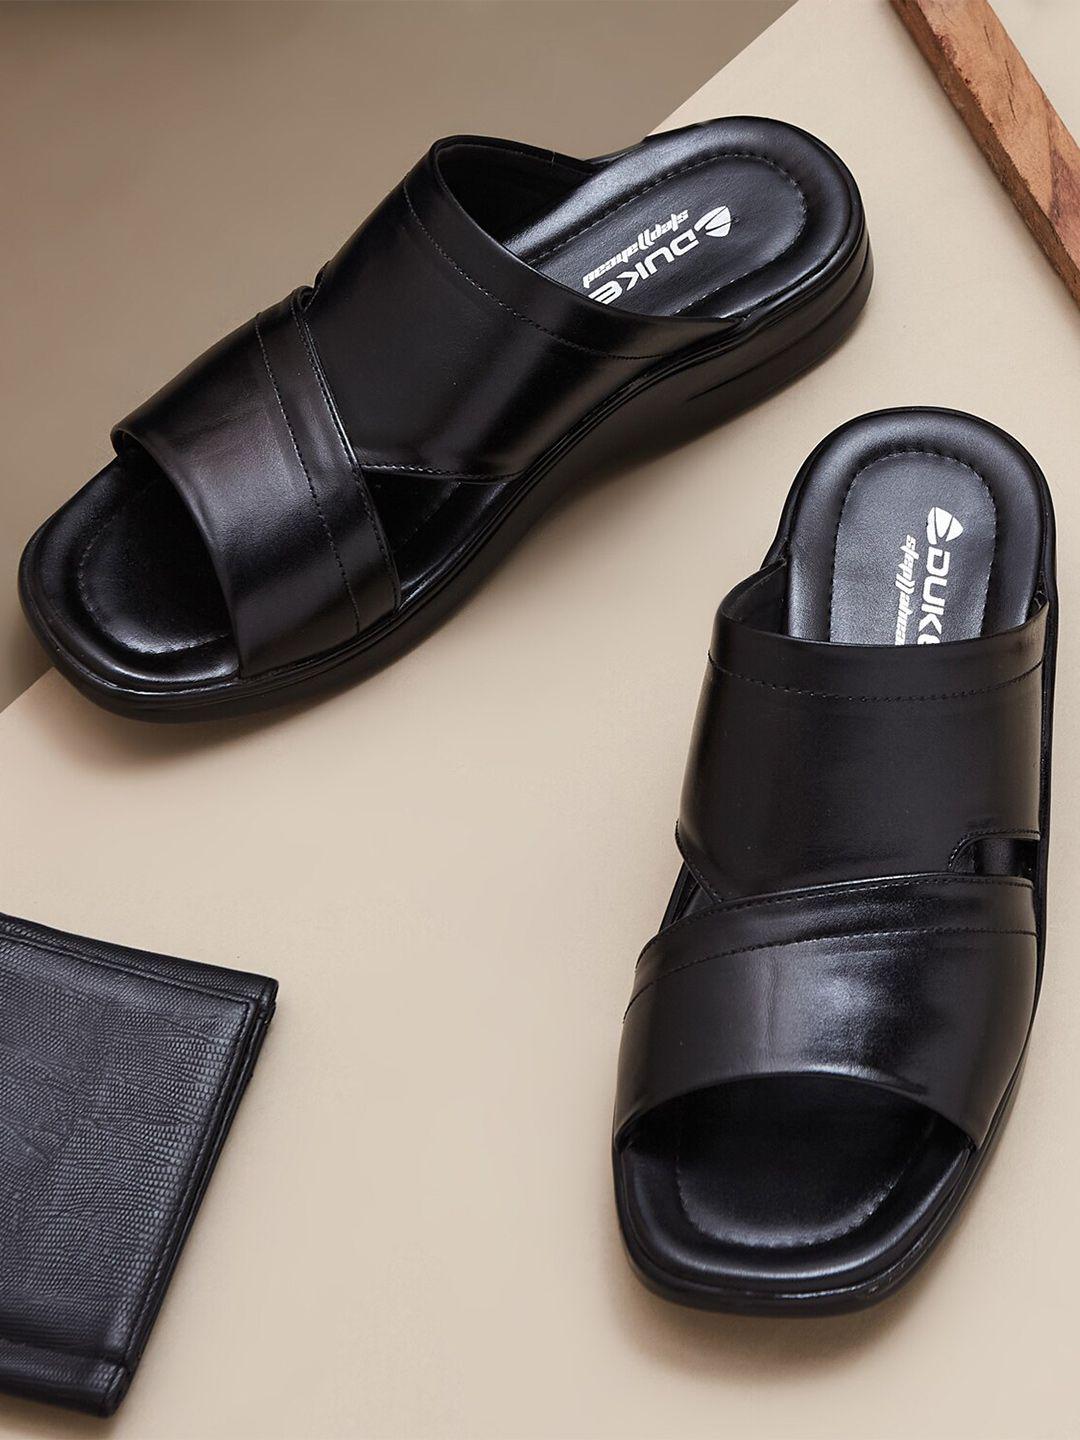 duke-men-open-toe-comfort-sandals